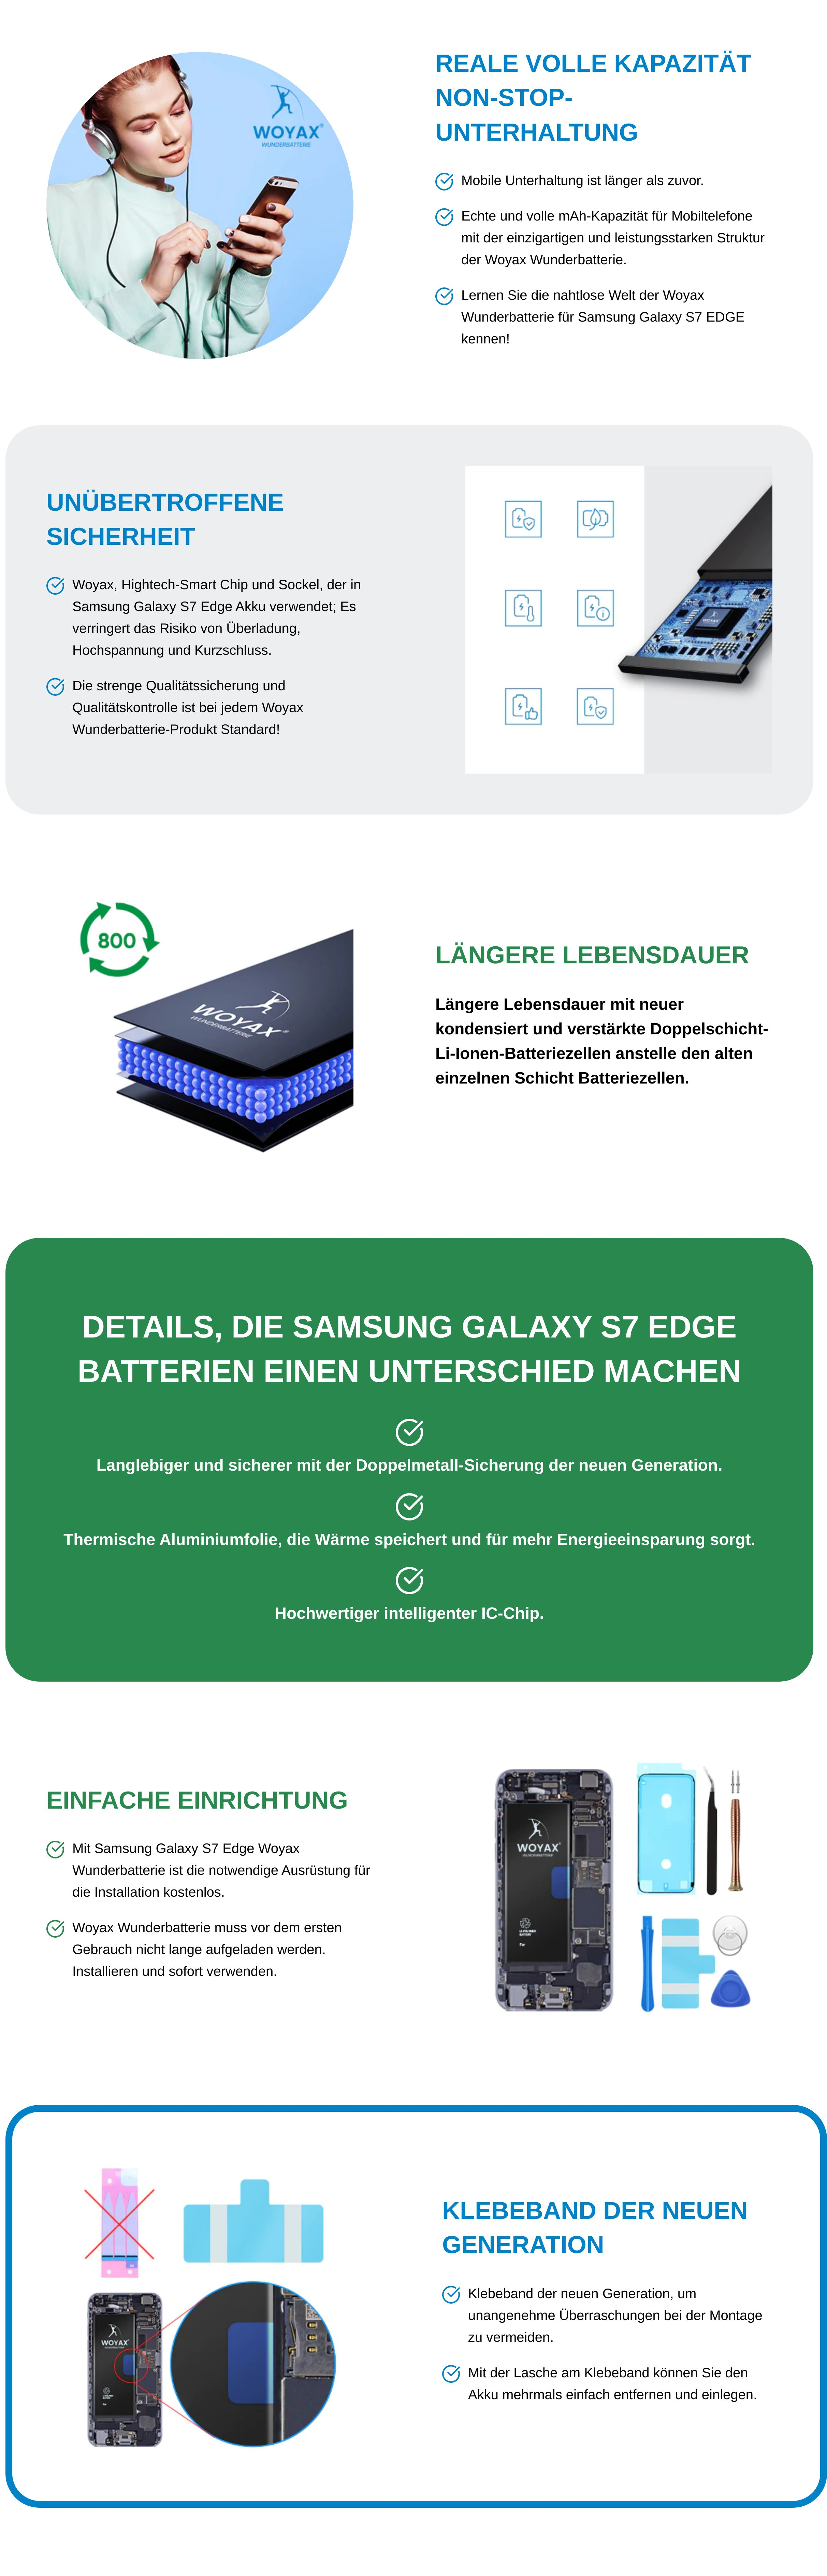 WOYAX Wunderbatterie für Akku EDGE Li-Ionen EB-BG935ABE 3600mAh / Galaxy Ersatzakku 3.85 Volt, Samsung Handy-Akku, S7